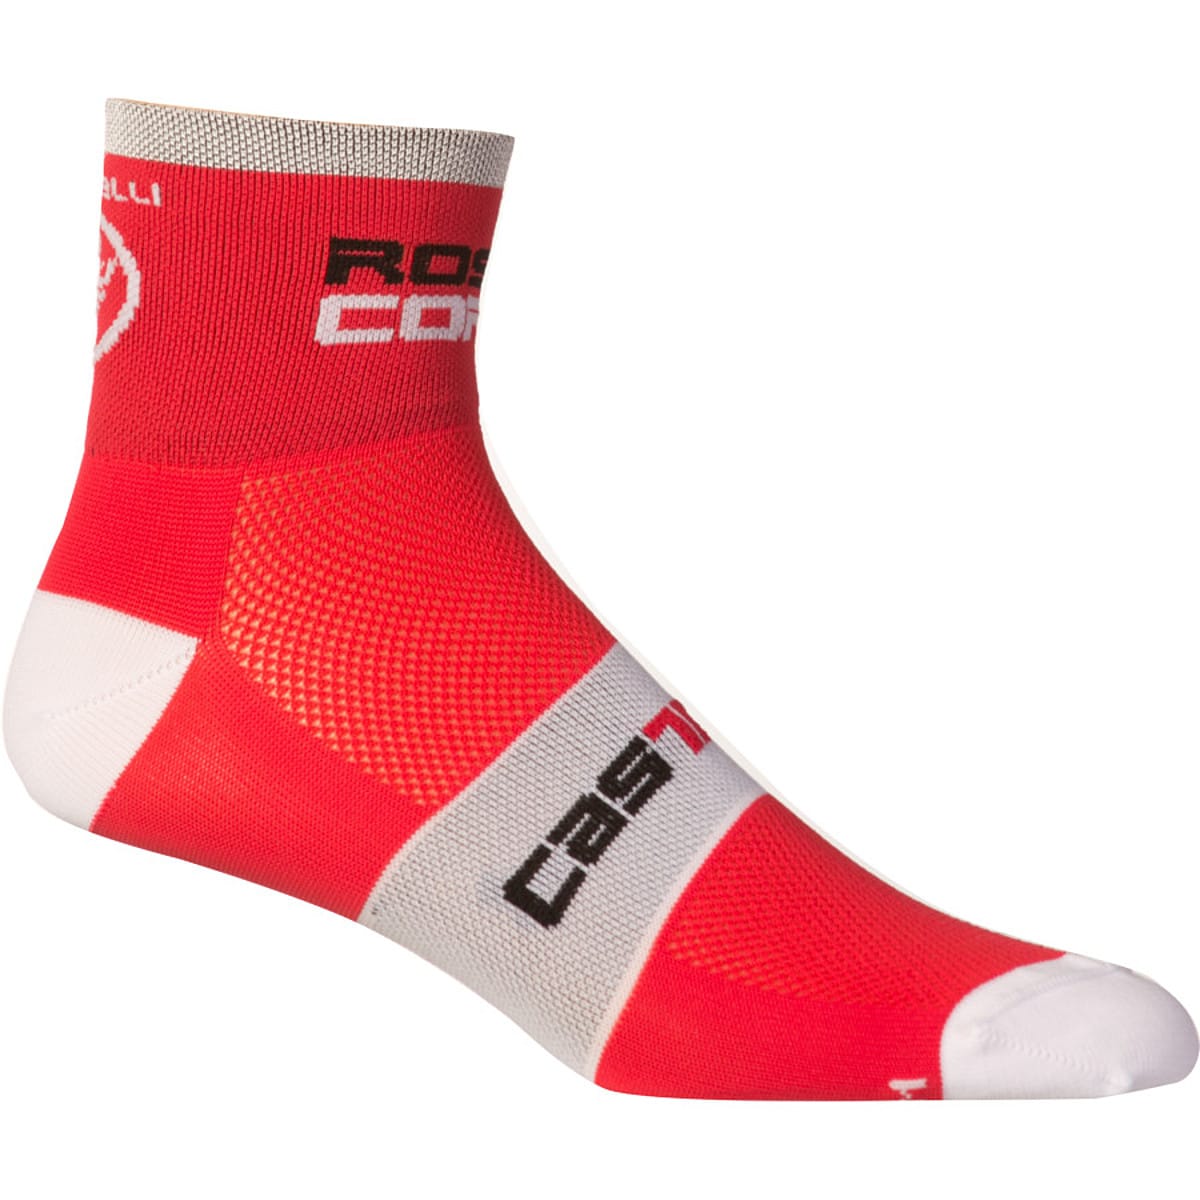 Castelli Rosso Corsa 6 Sock Men's